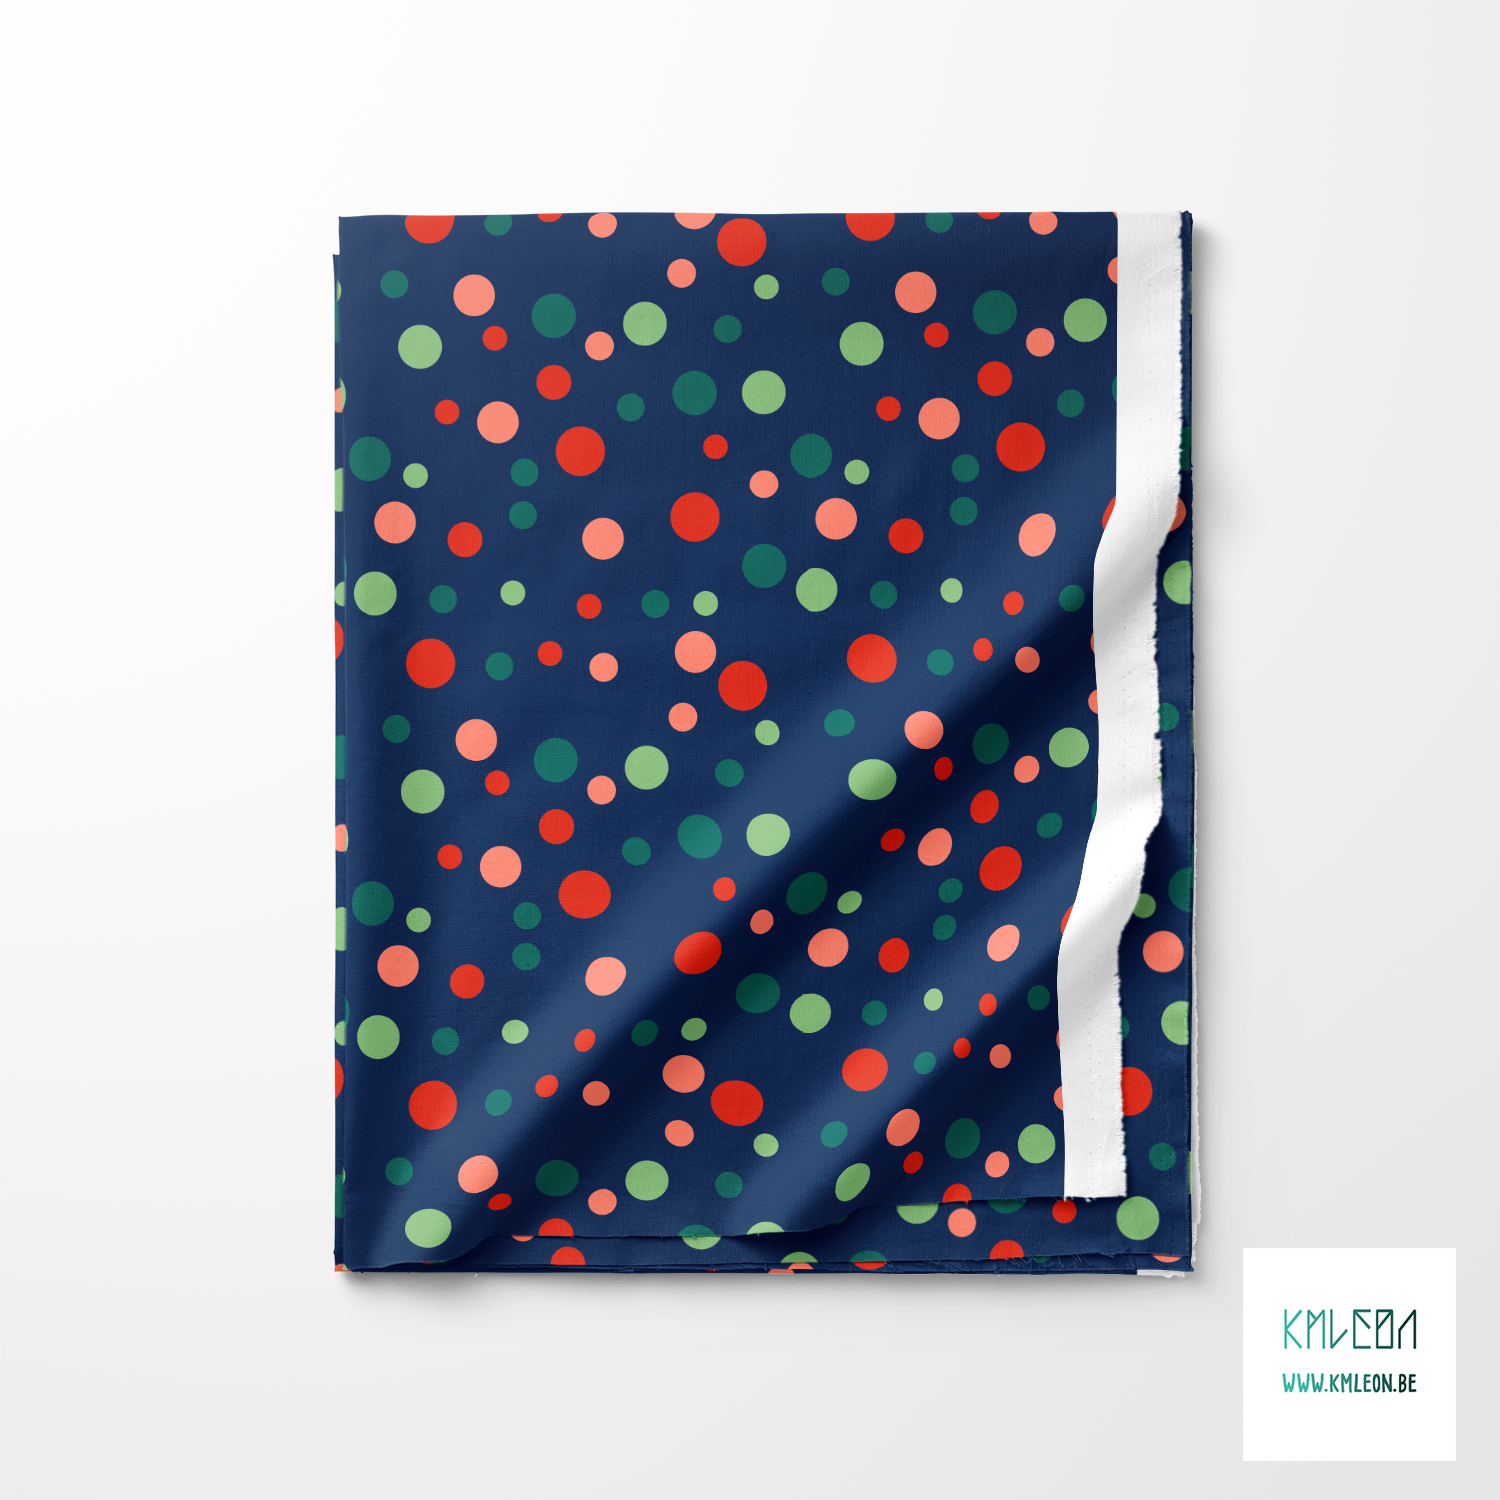 Random red, coral and green polka dots fabric